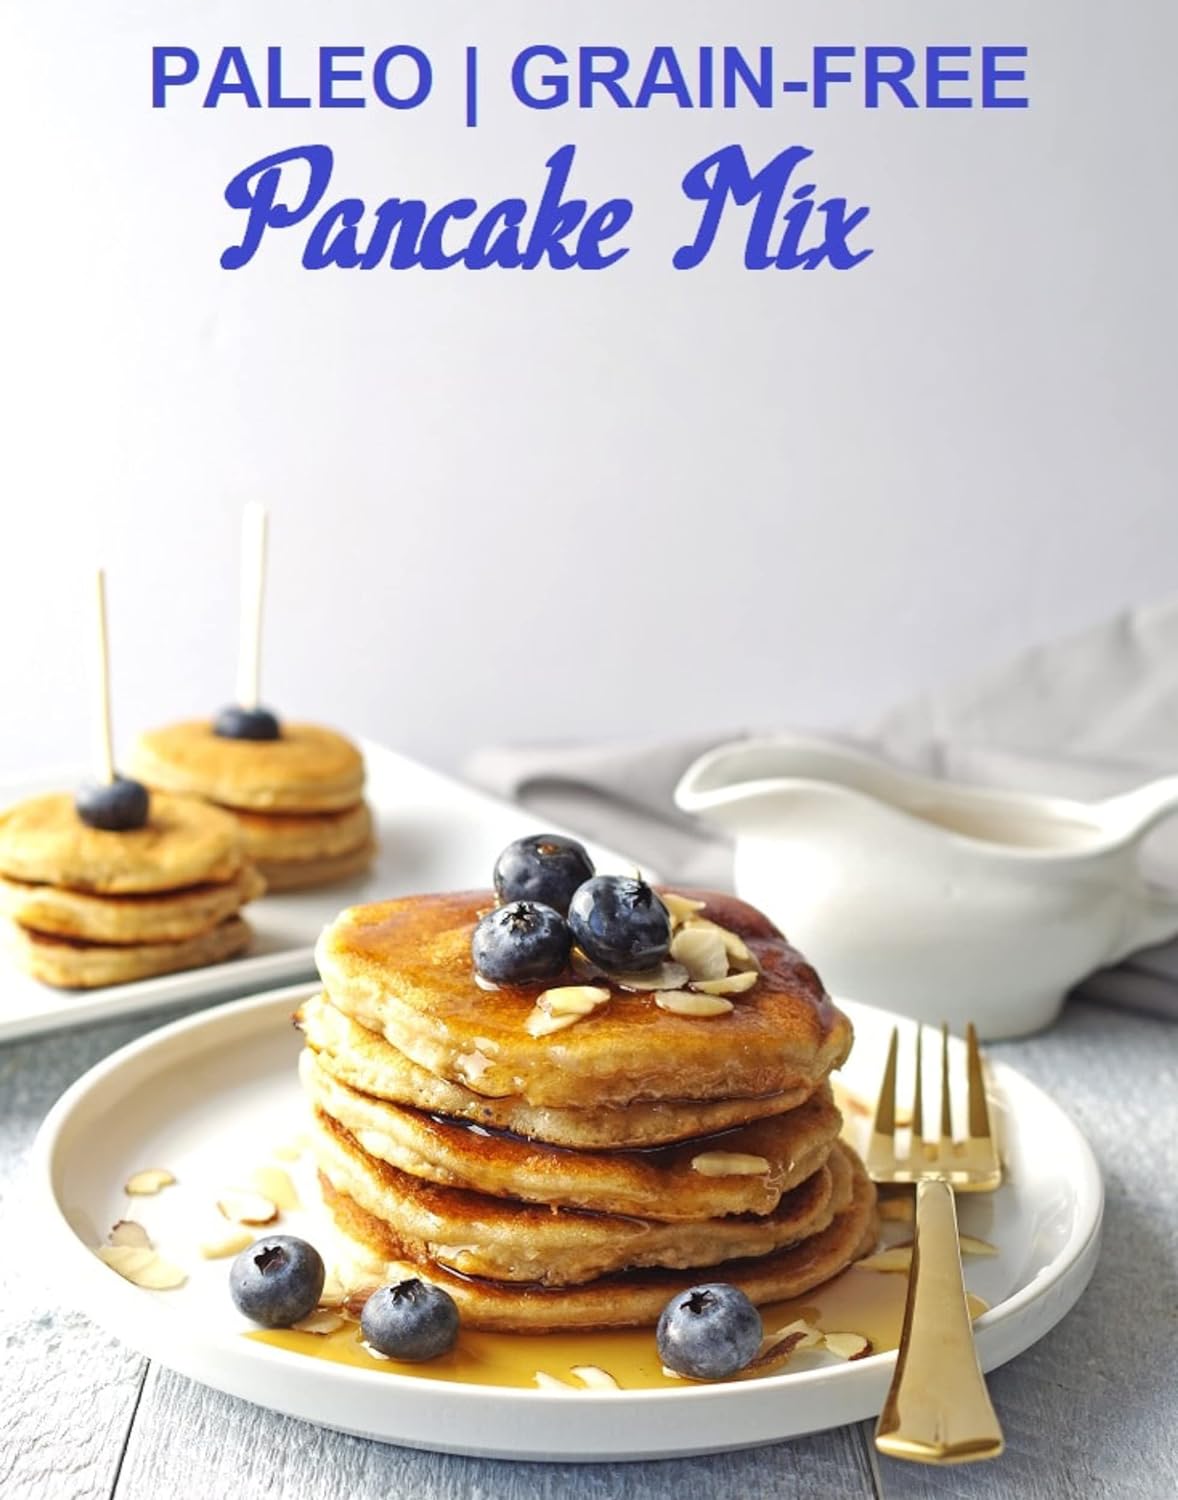 Paleo Pancake & Waffle Mix by Birch Benders, Kosher, Gluten-free, 12 oz Bag : Grocery & Gourmet Food